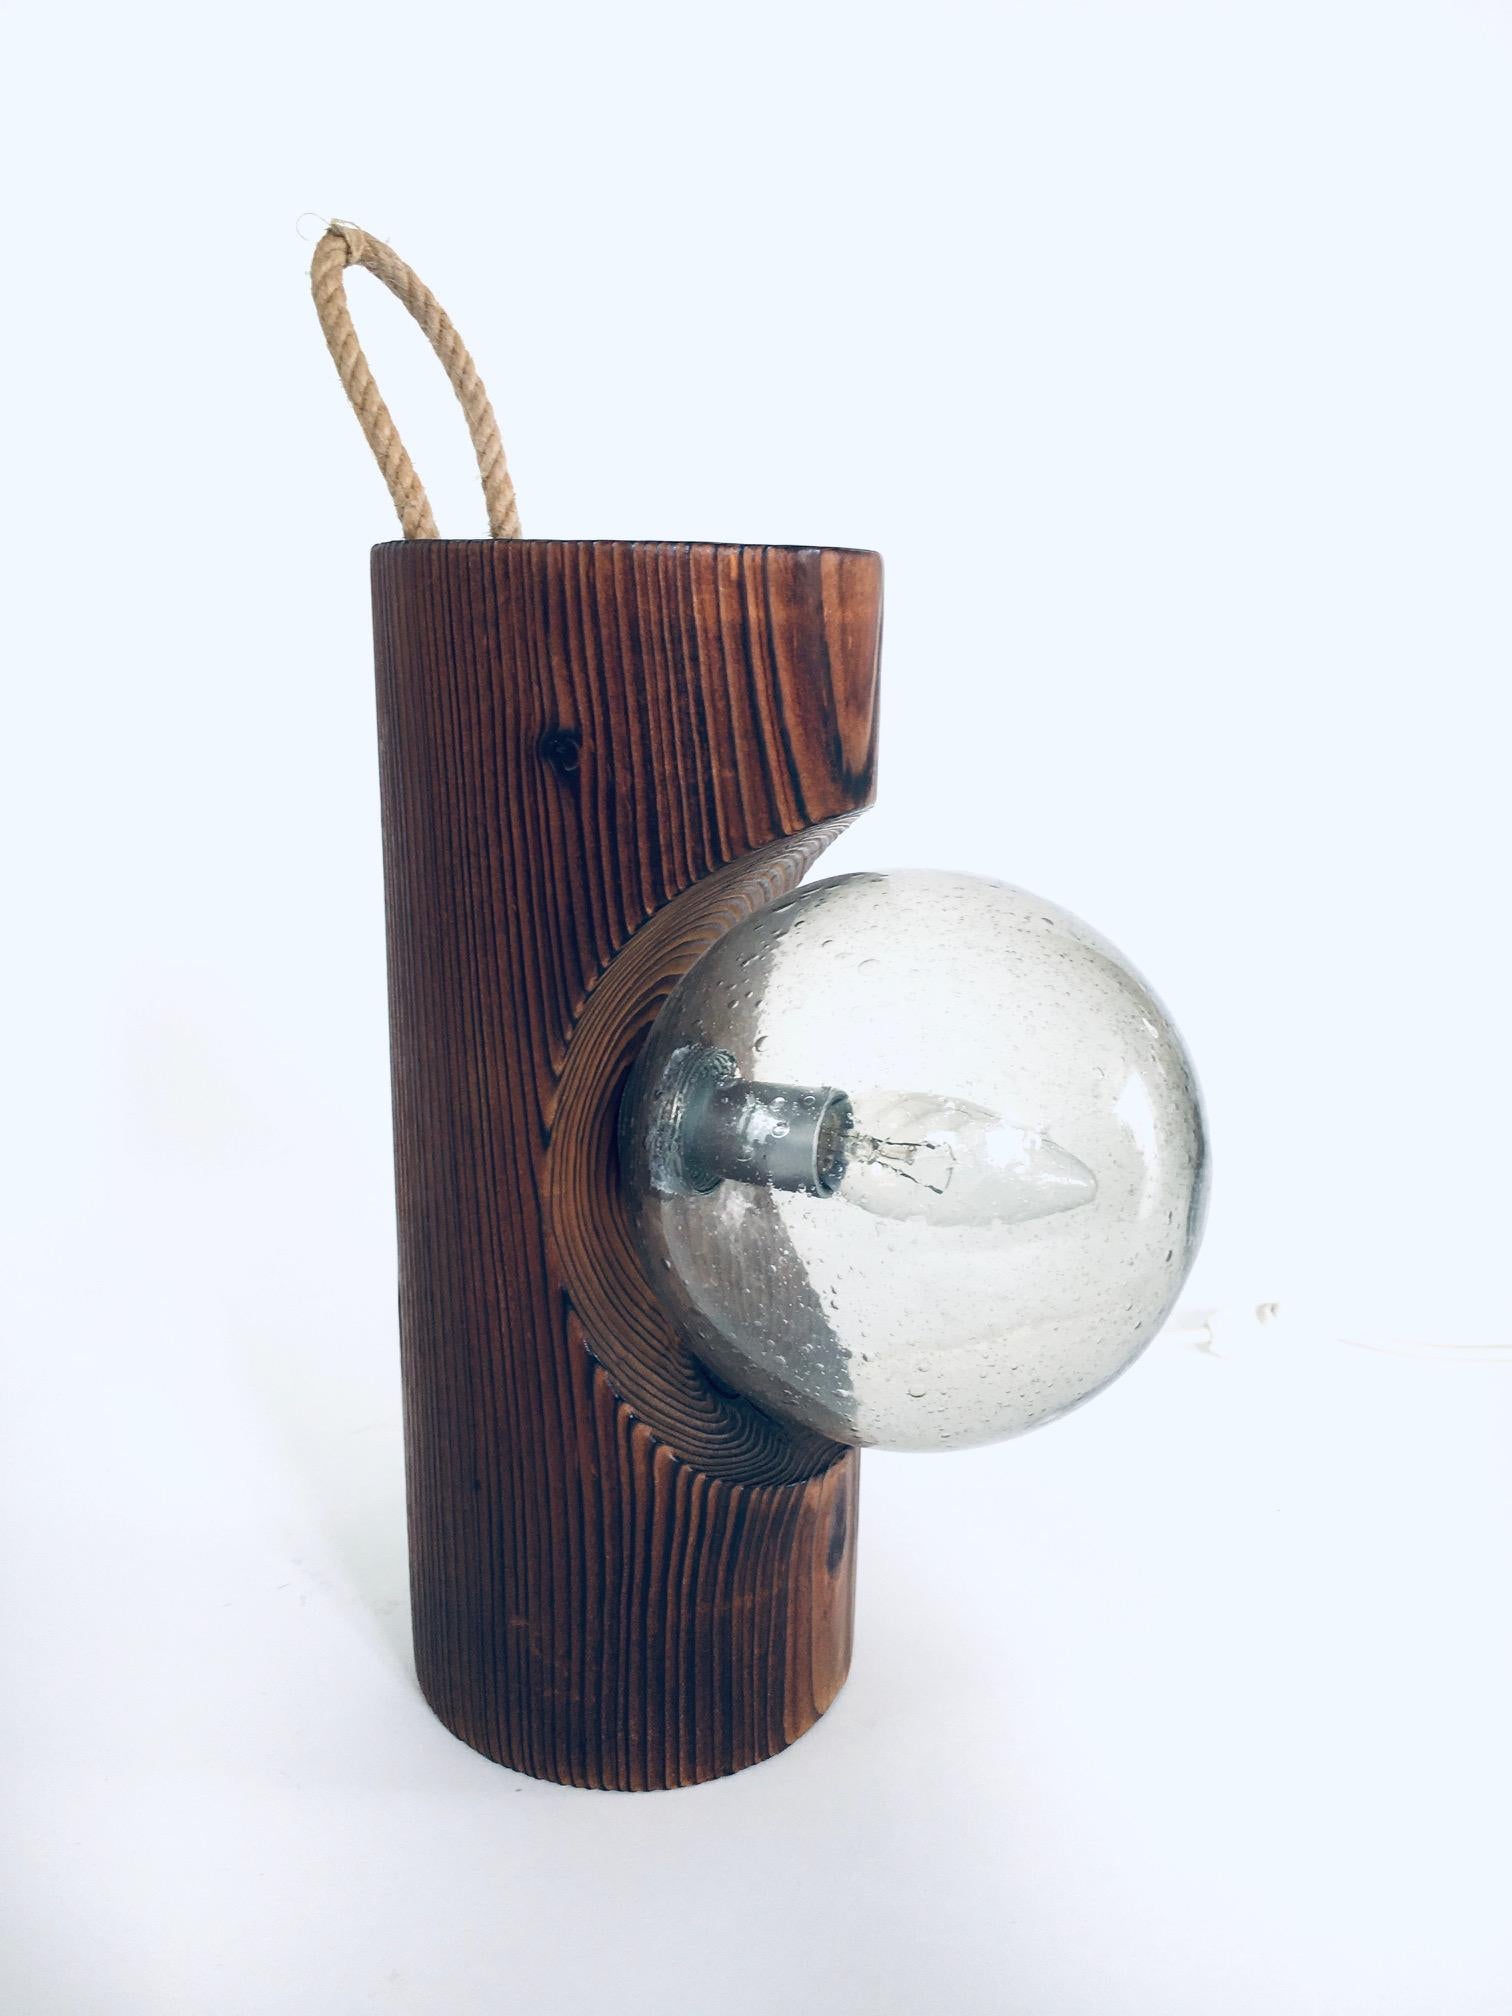 Brutalist Design Wood Table or Wall Lamp by Temde Leuchten, Switzerland 1960's For Sale 8